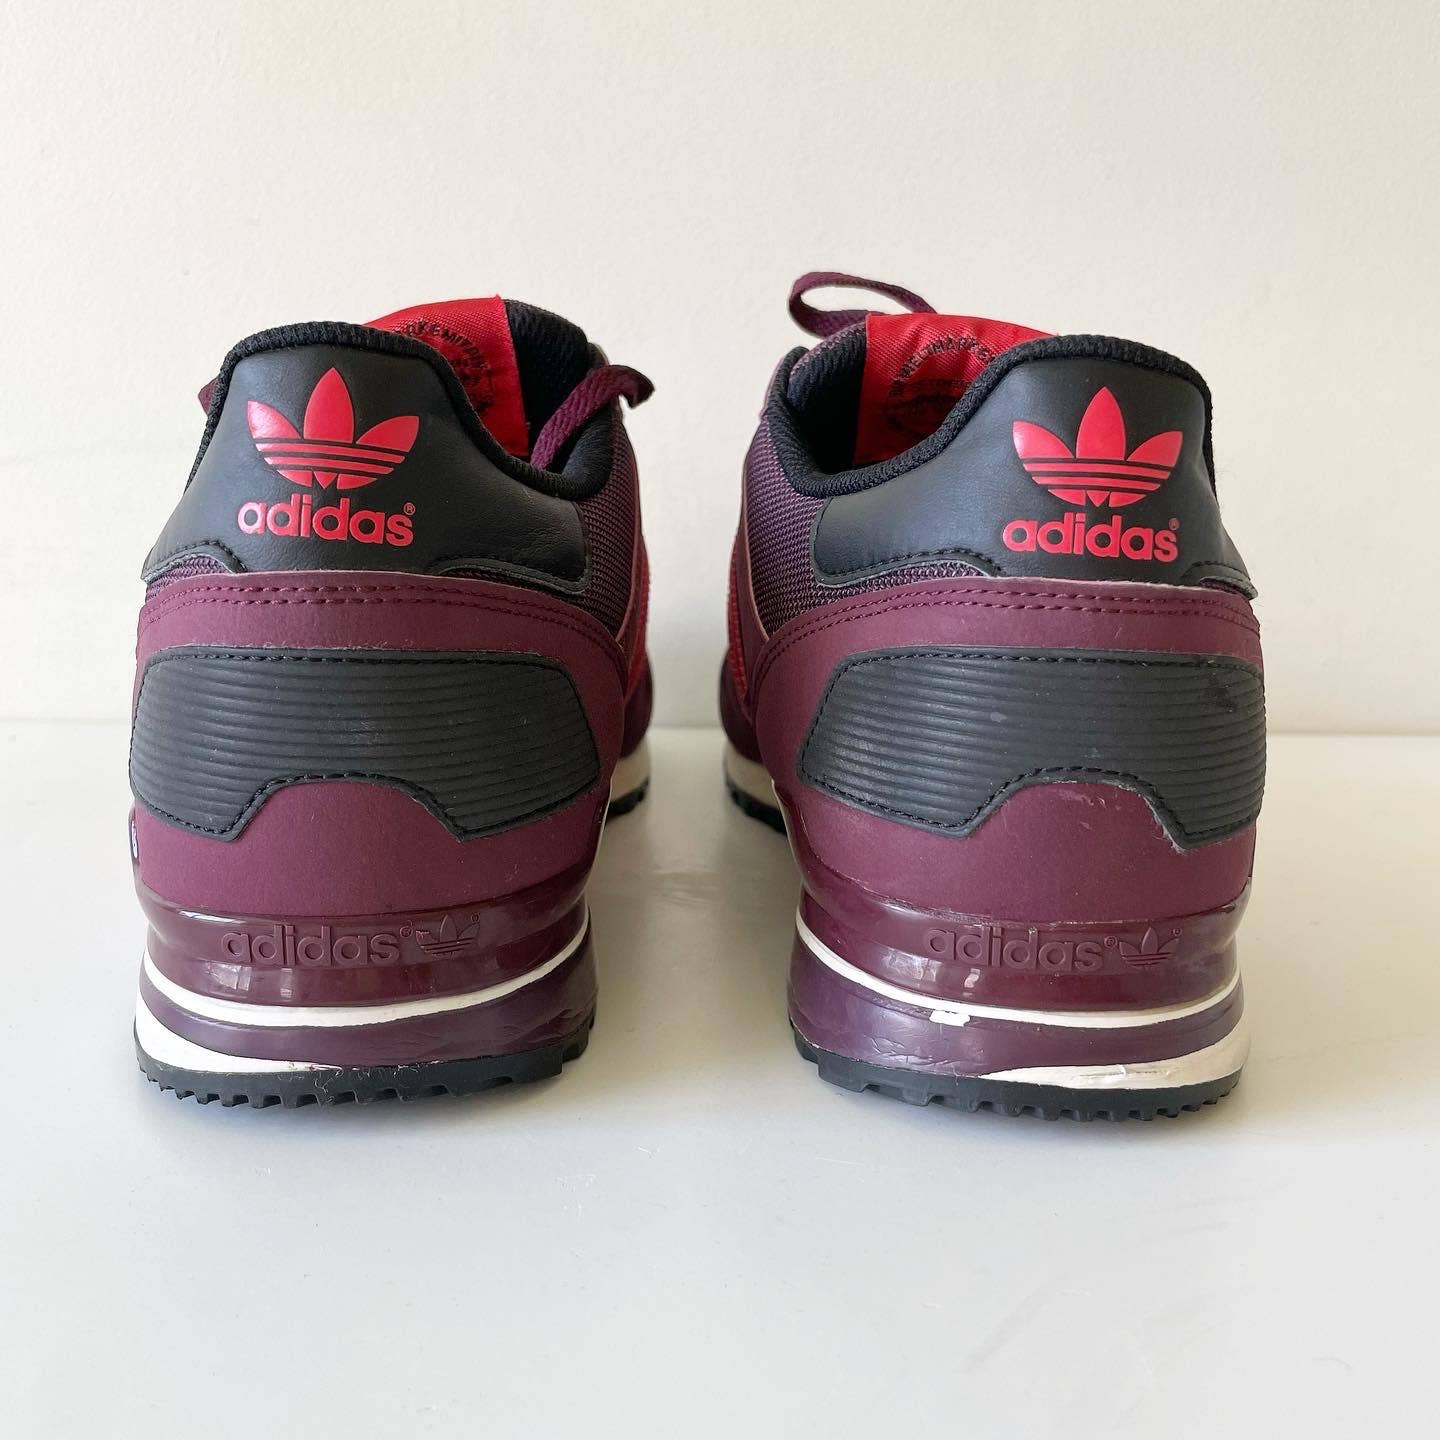 Adidas ZX 700 Maroon Red Men's Classic Originals Sneaker Shoes